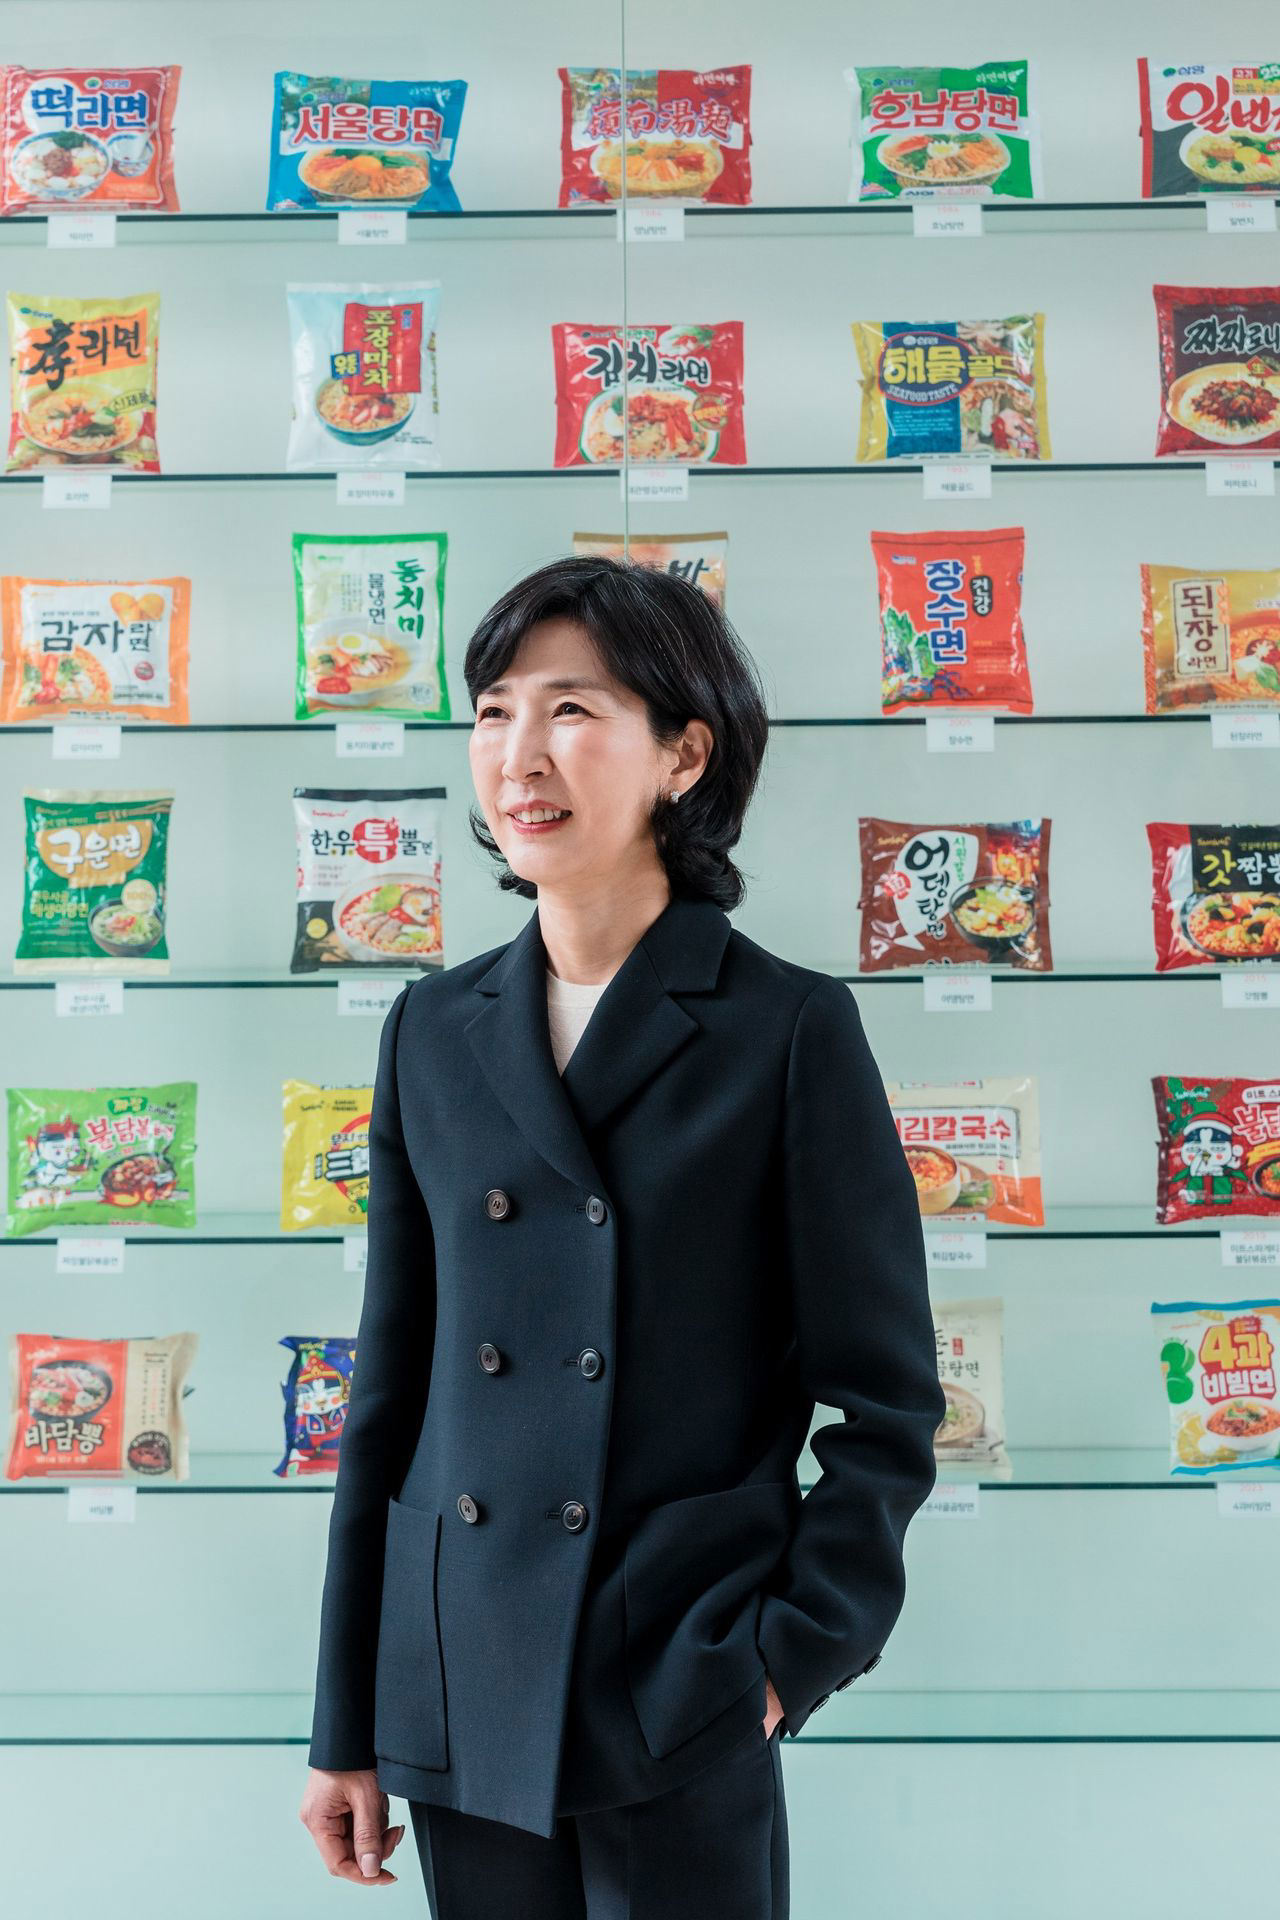 Woman In Digital: My Grocery Finds Below P300 in Korea's No Brand Store